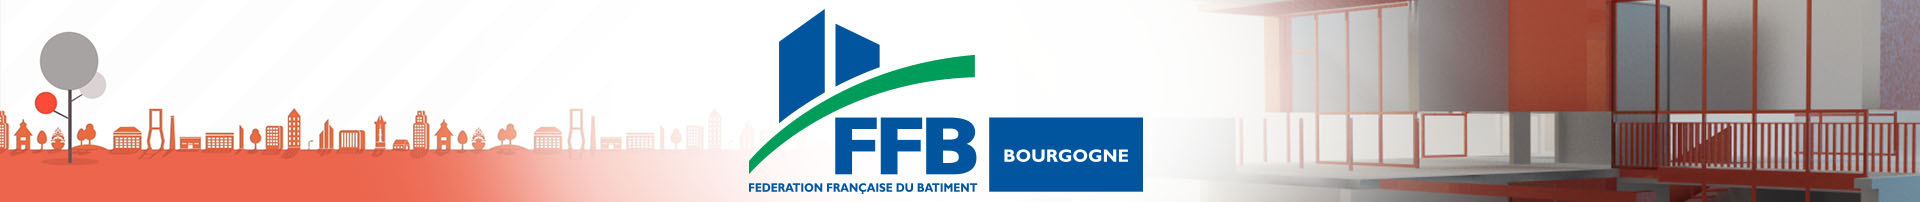 ffb-bourgogne-franche-comte Banniere